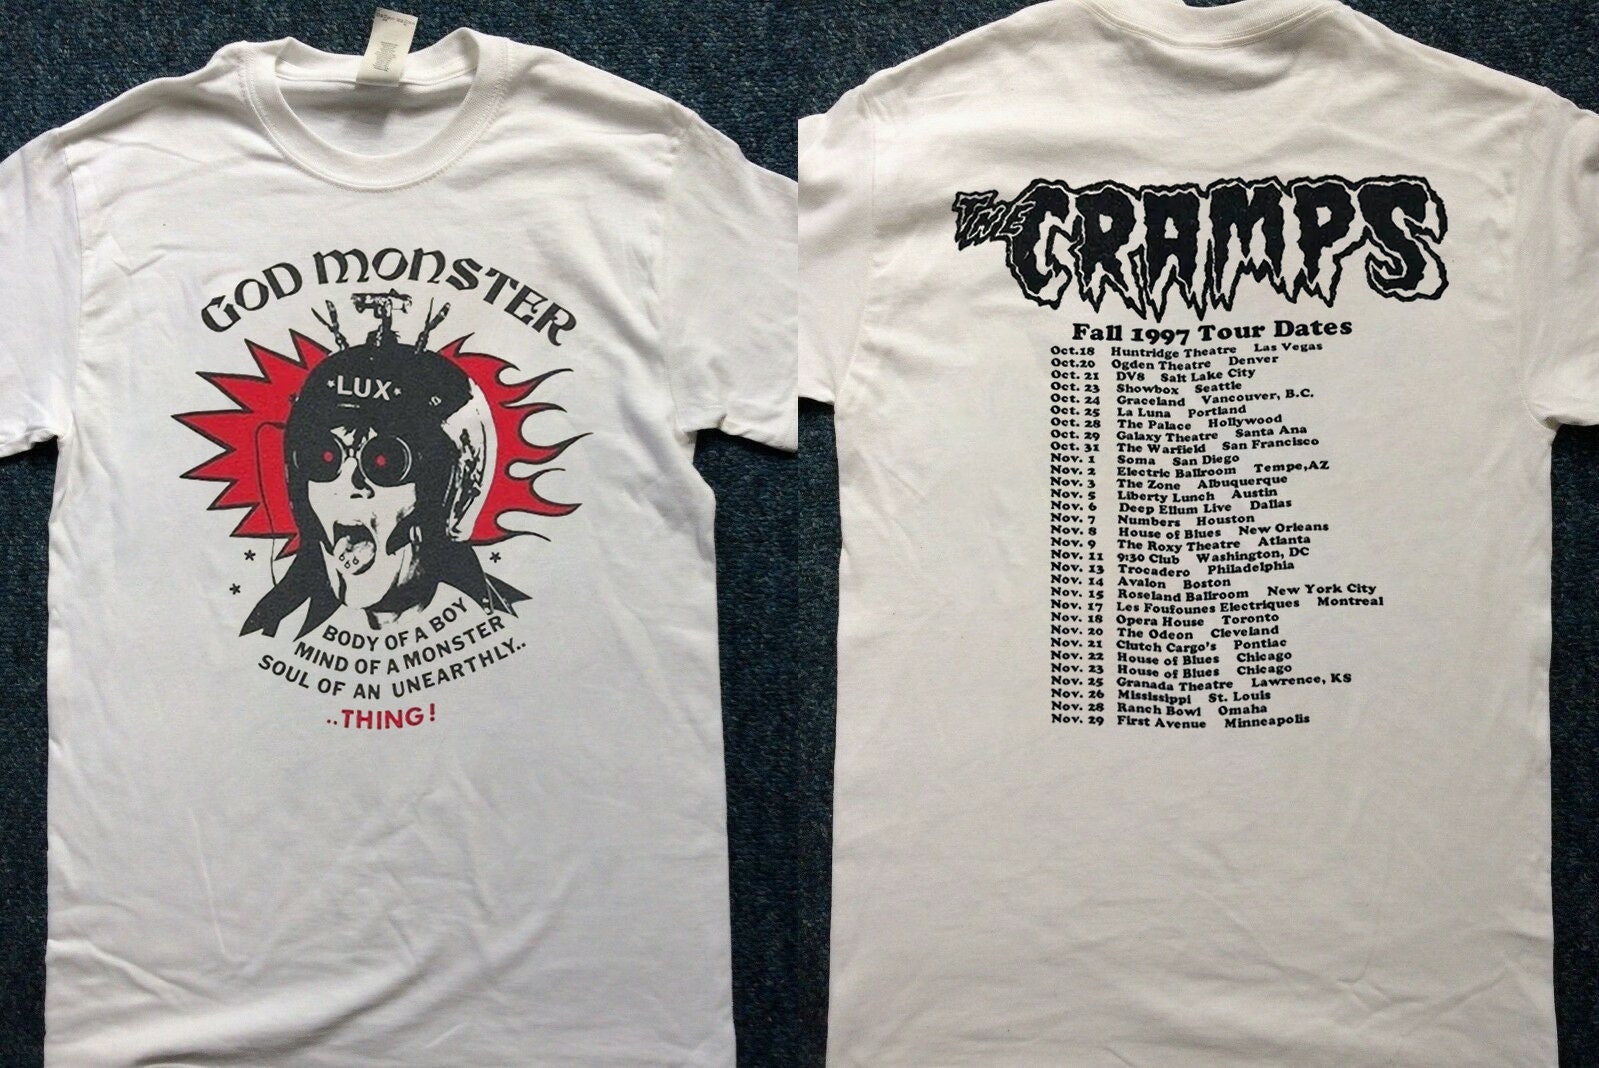 The Cramps God Monster Tour 1997 T-Shirt, 90s The Cramps Rock Band Tour T-Shirt